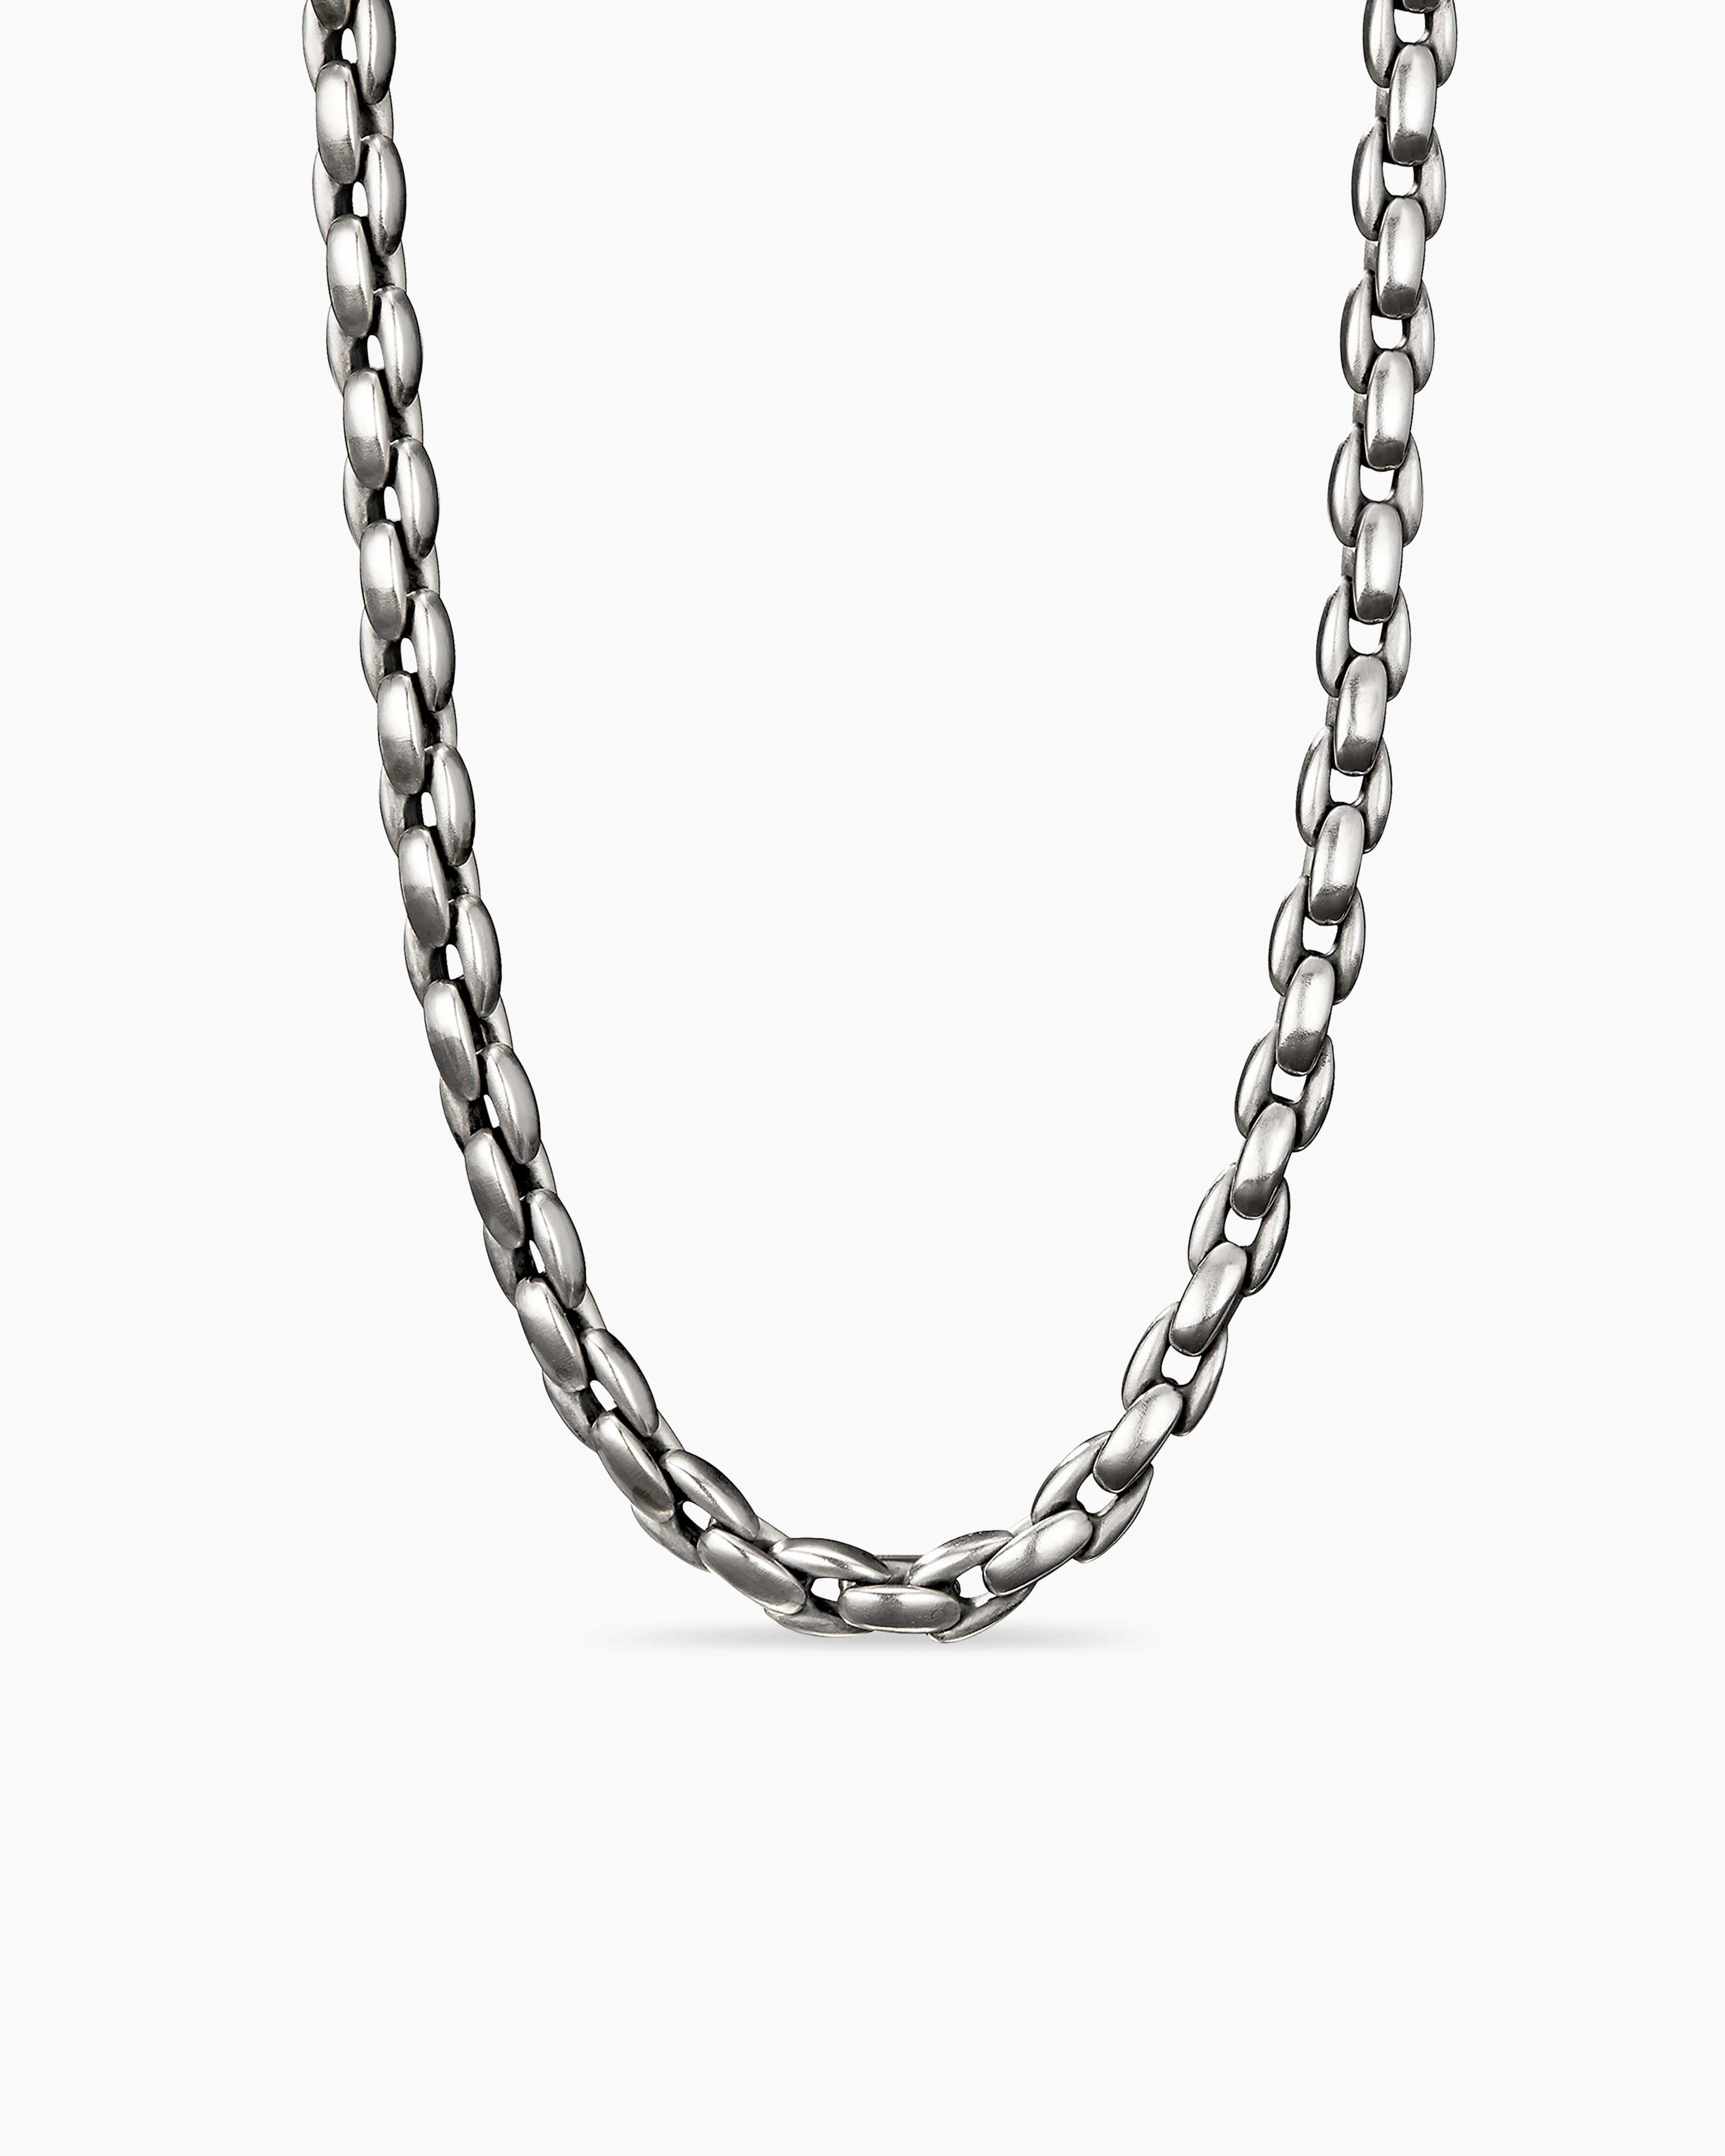 David Yurman Men's Medium Box Chain Bracelet - Silver